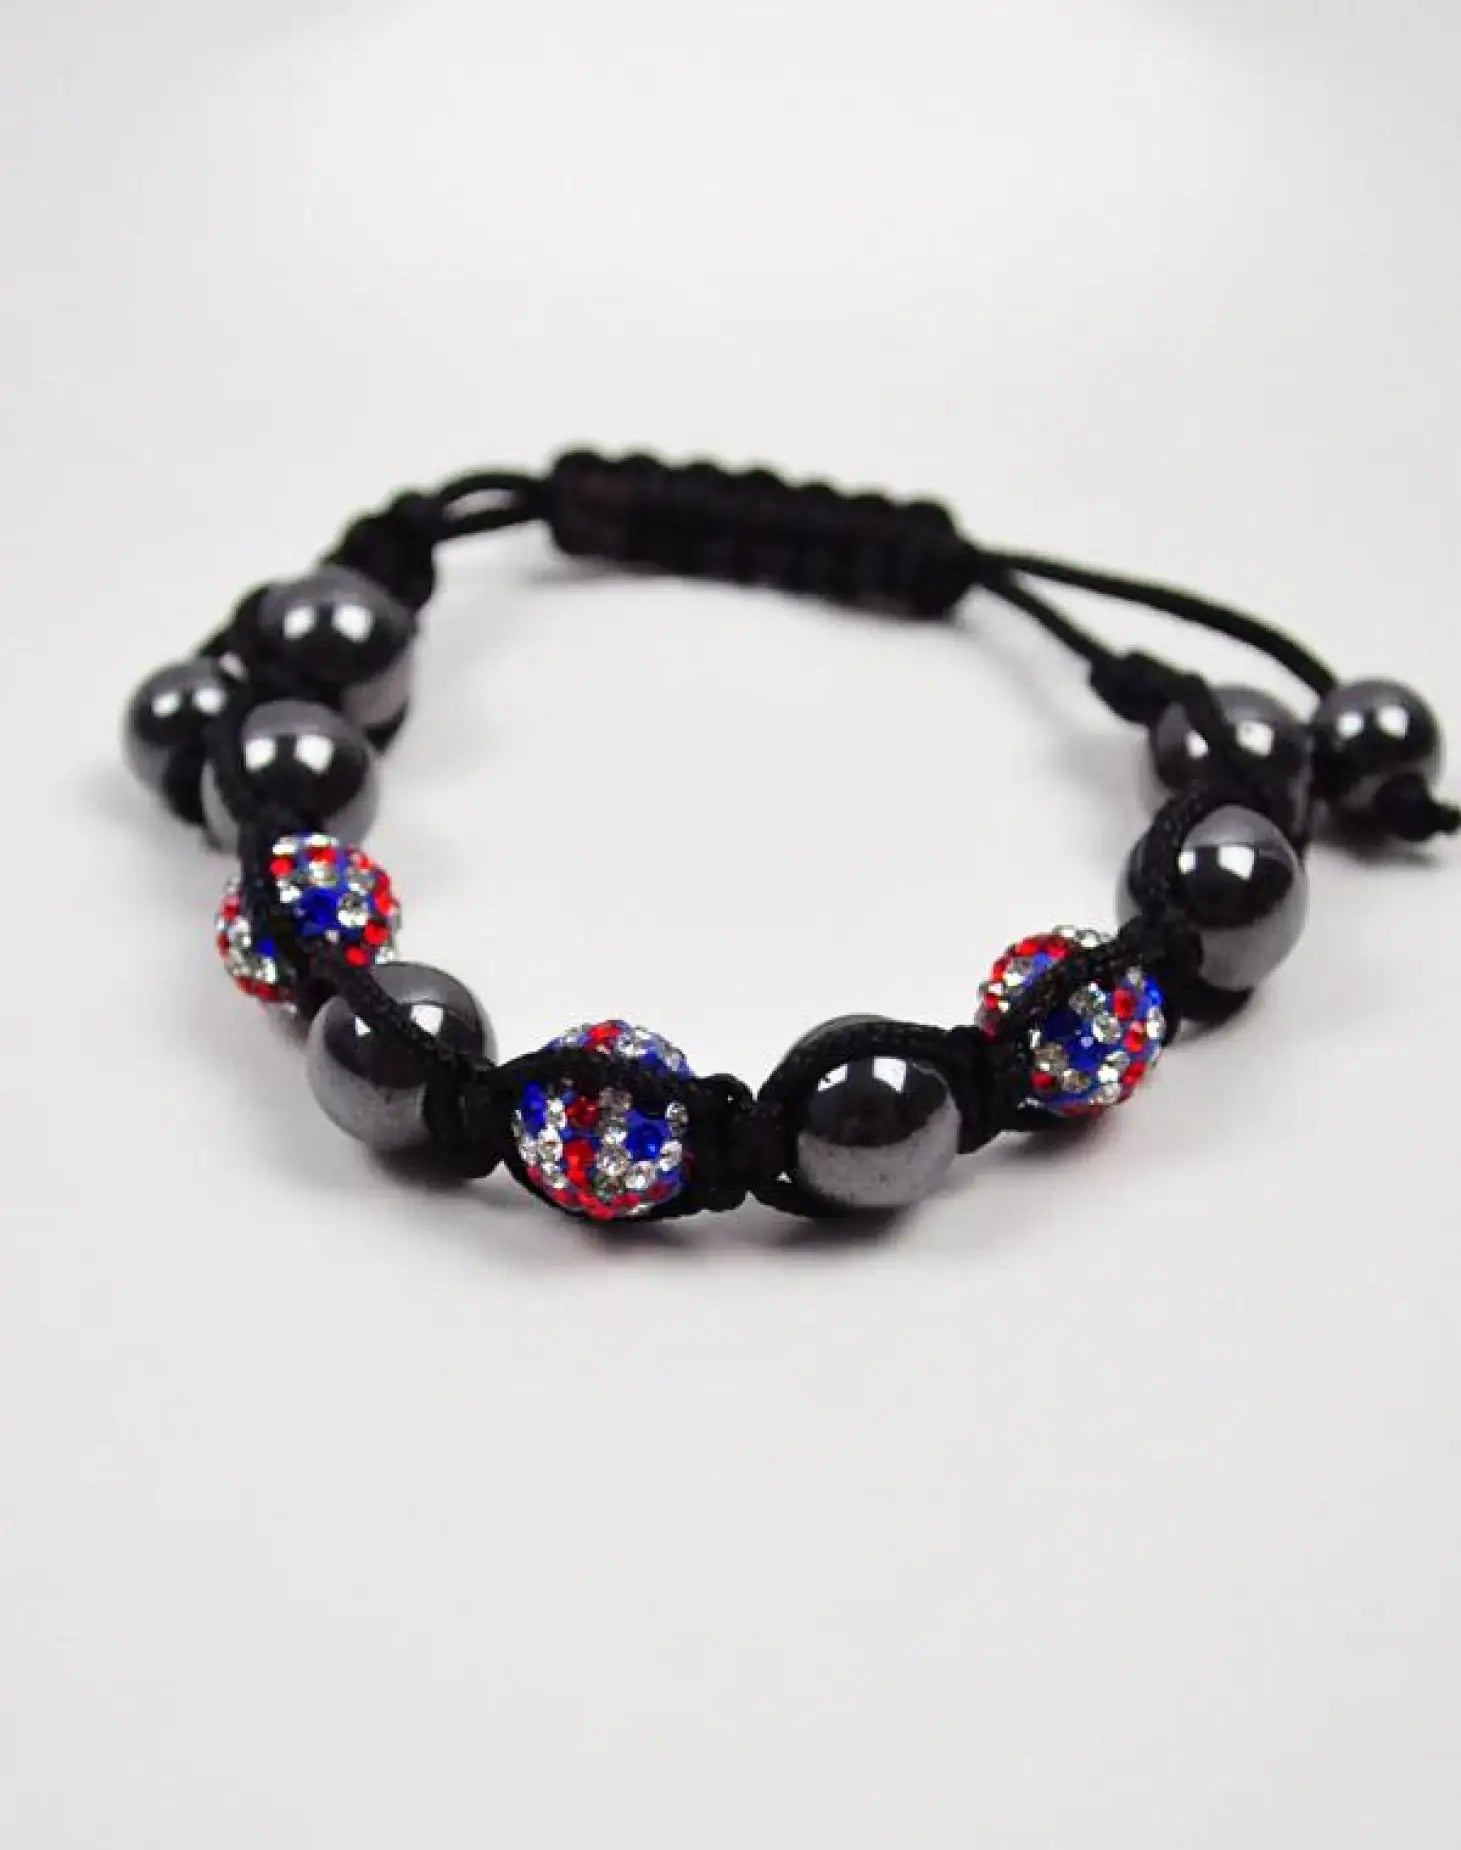 Black bracelet with red, white, and blue beads, Union Jack Adjustable Charm Bracelet.